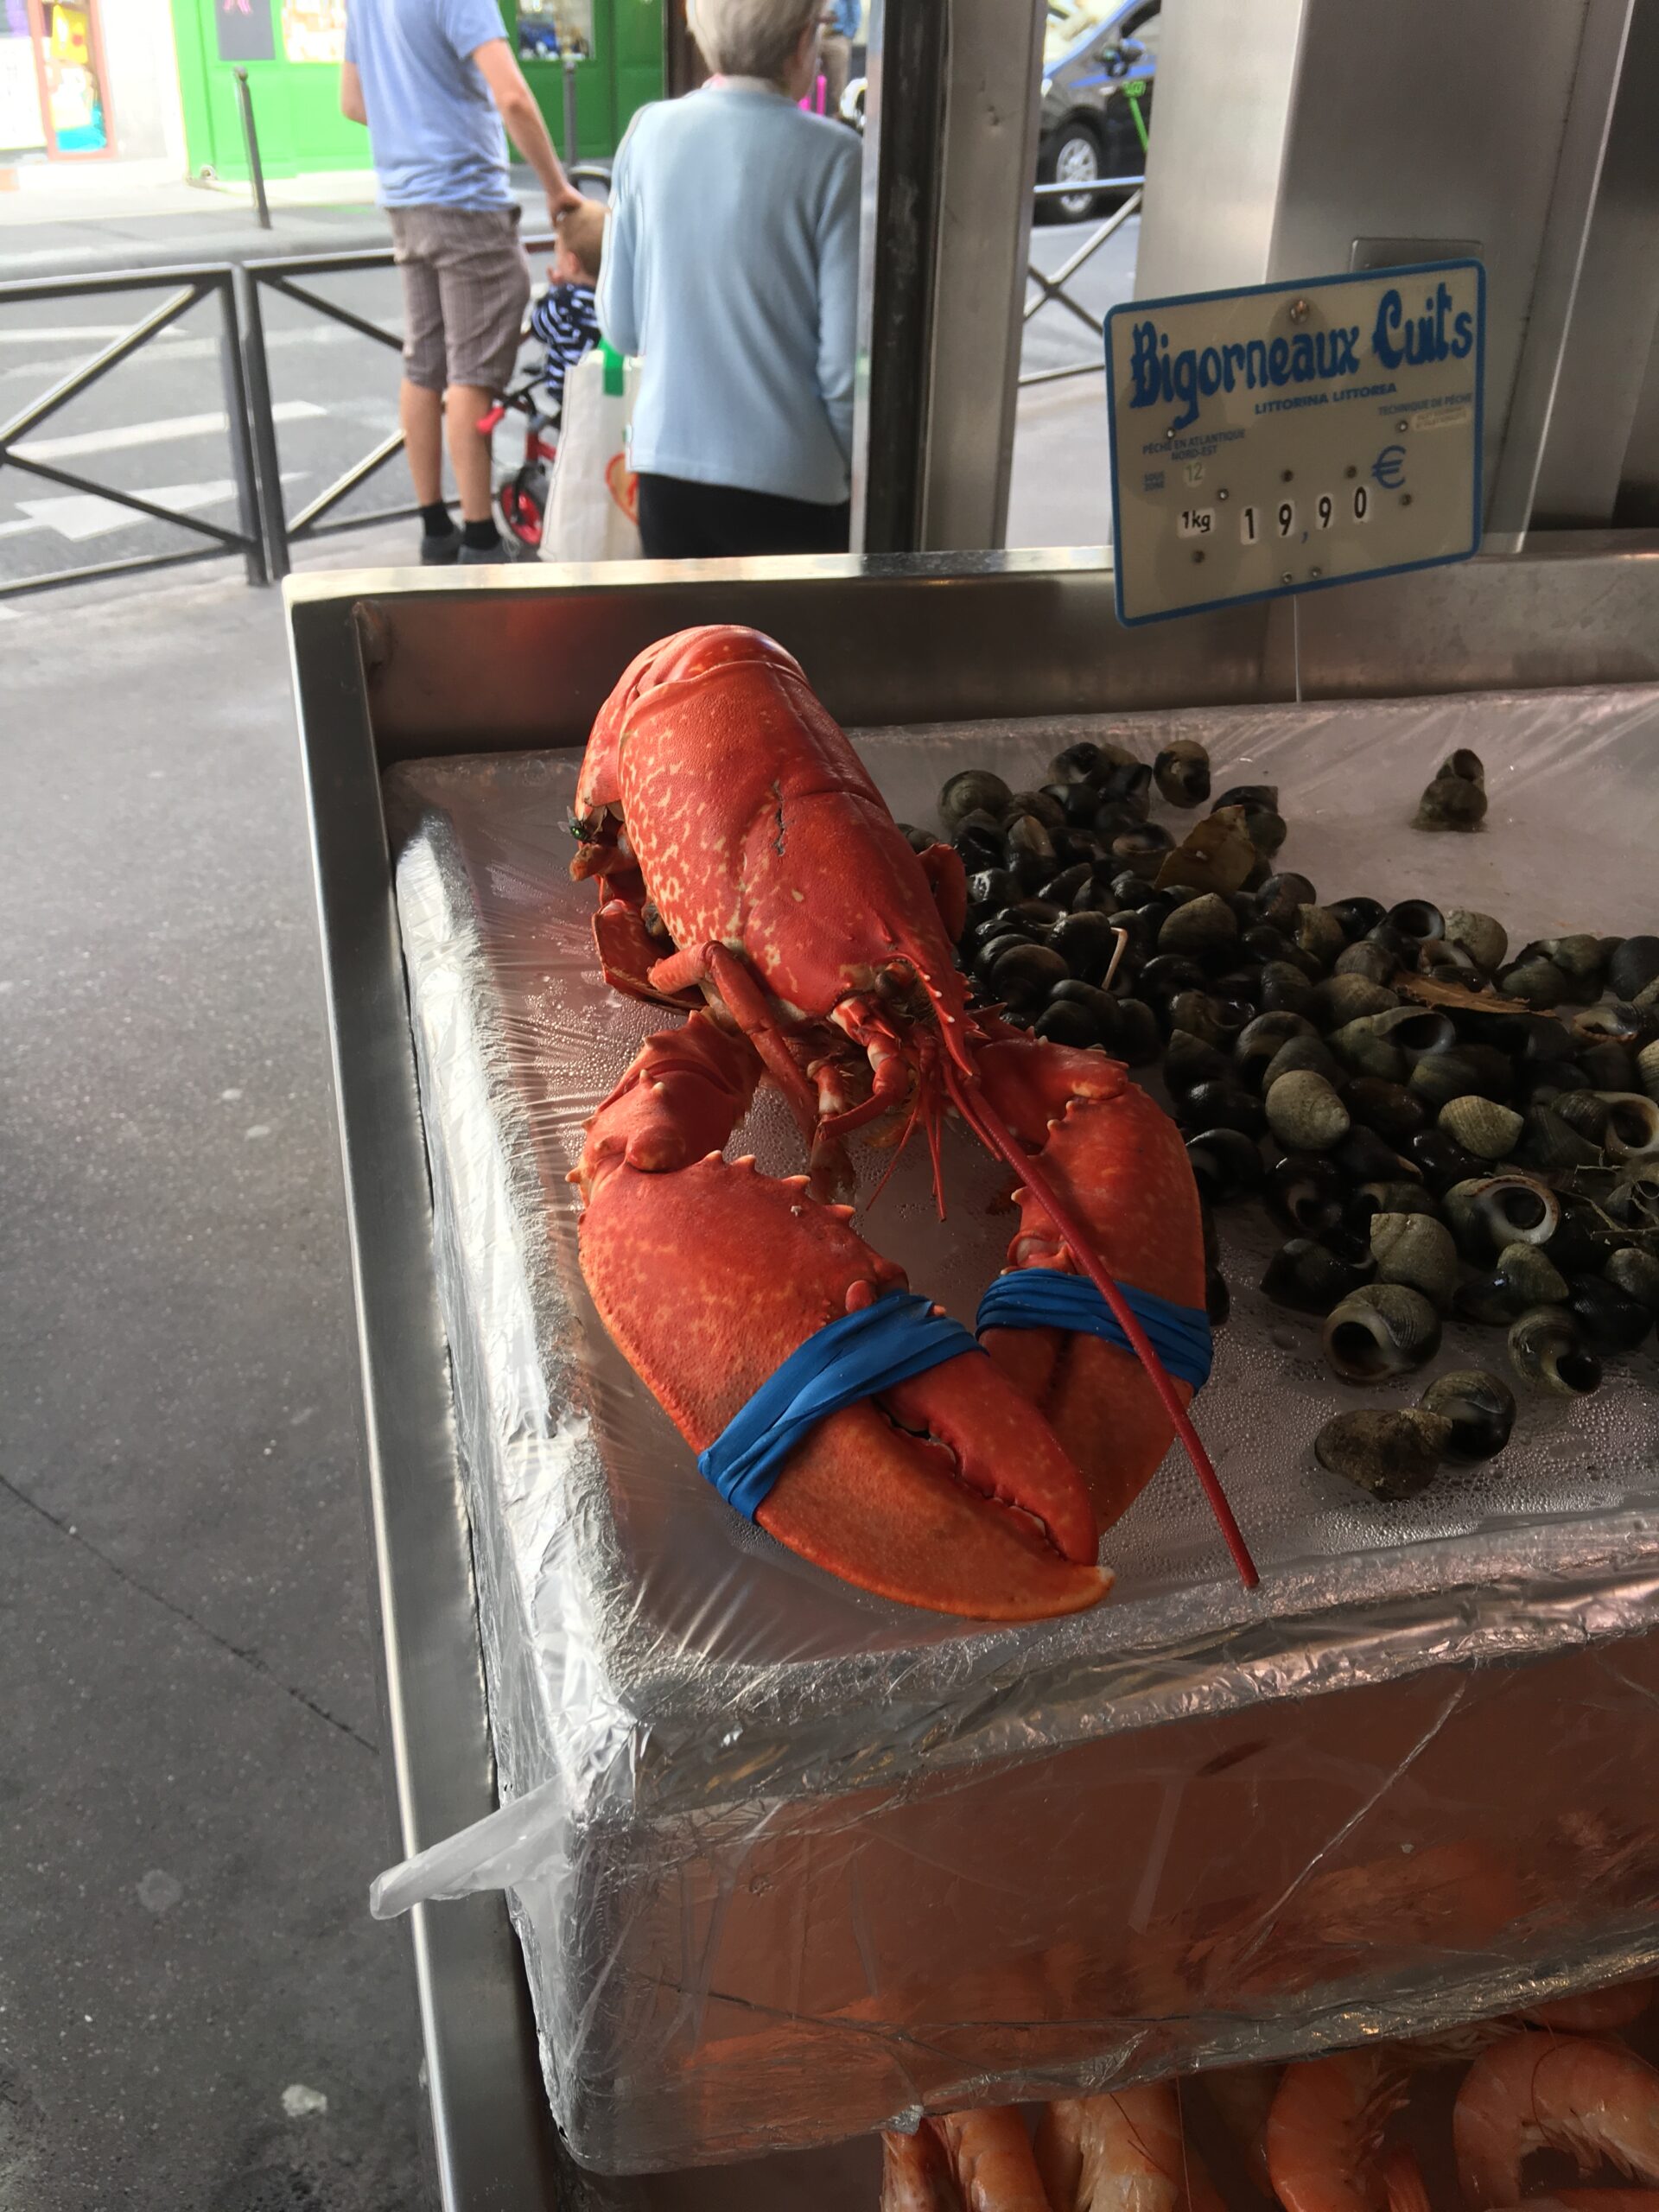 Seafood in Paris